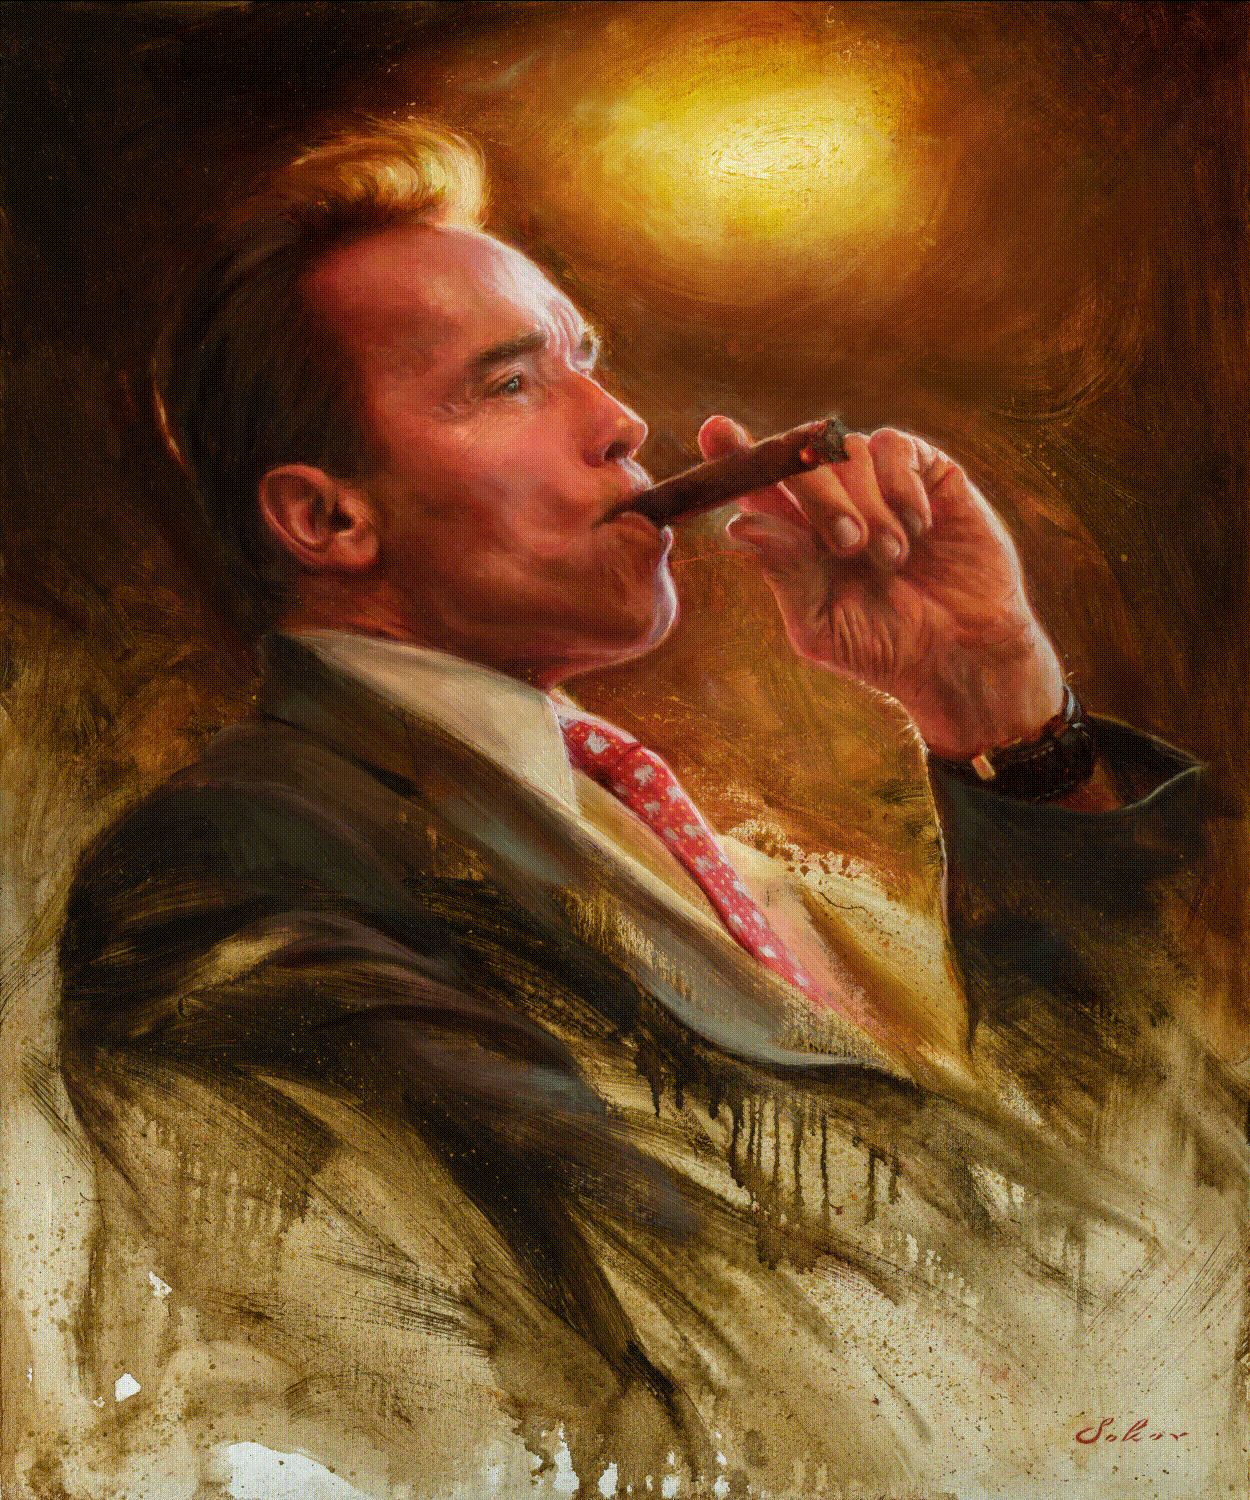 Arnold Smoking a Stogie by Pavel Sokov